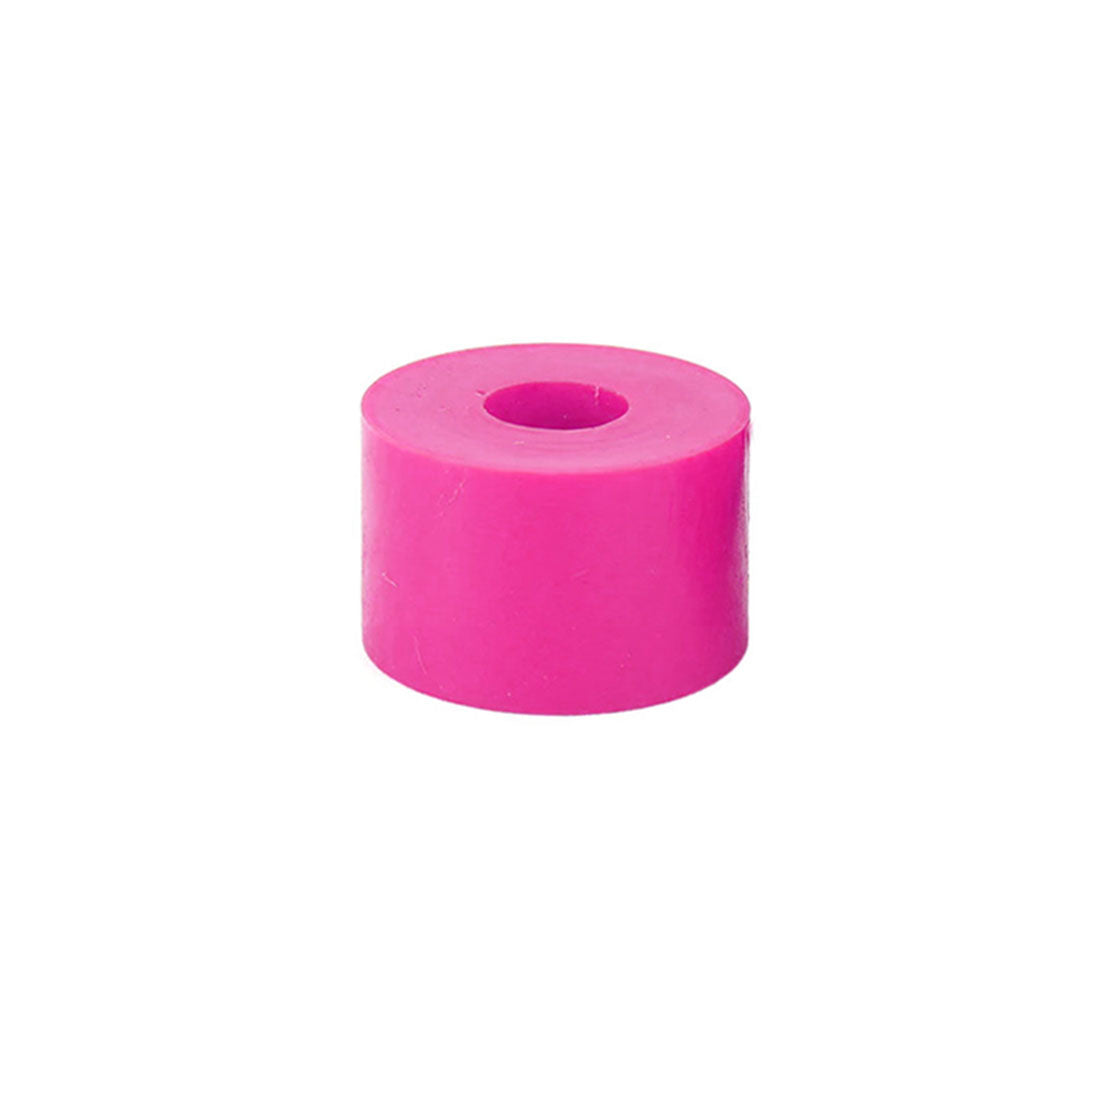 ABEC 11 Reflex Barrel Bushing - Single .550&quot; 77a - Pink Skateboard Hardware and Parts